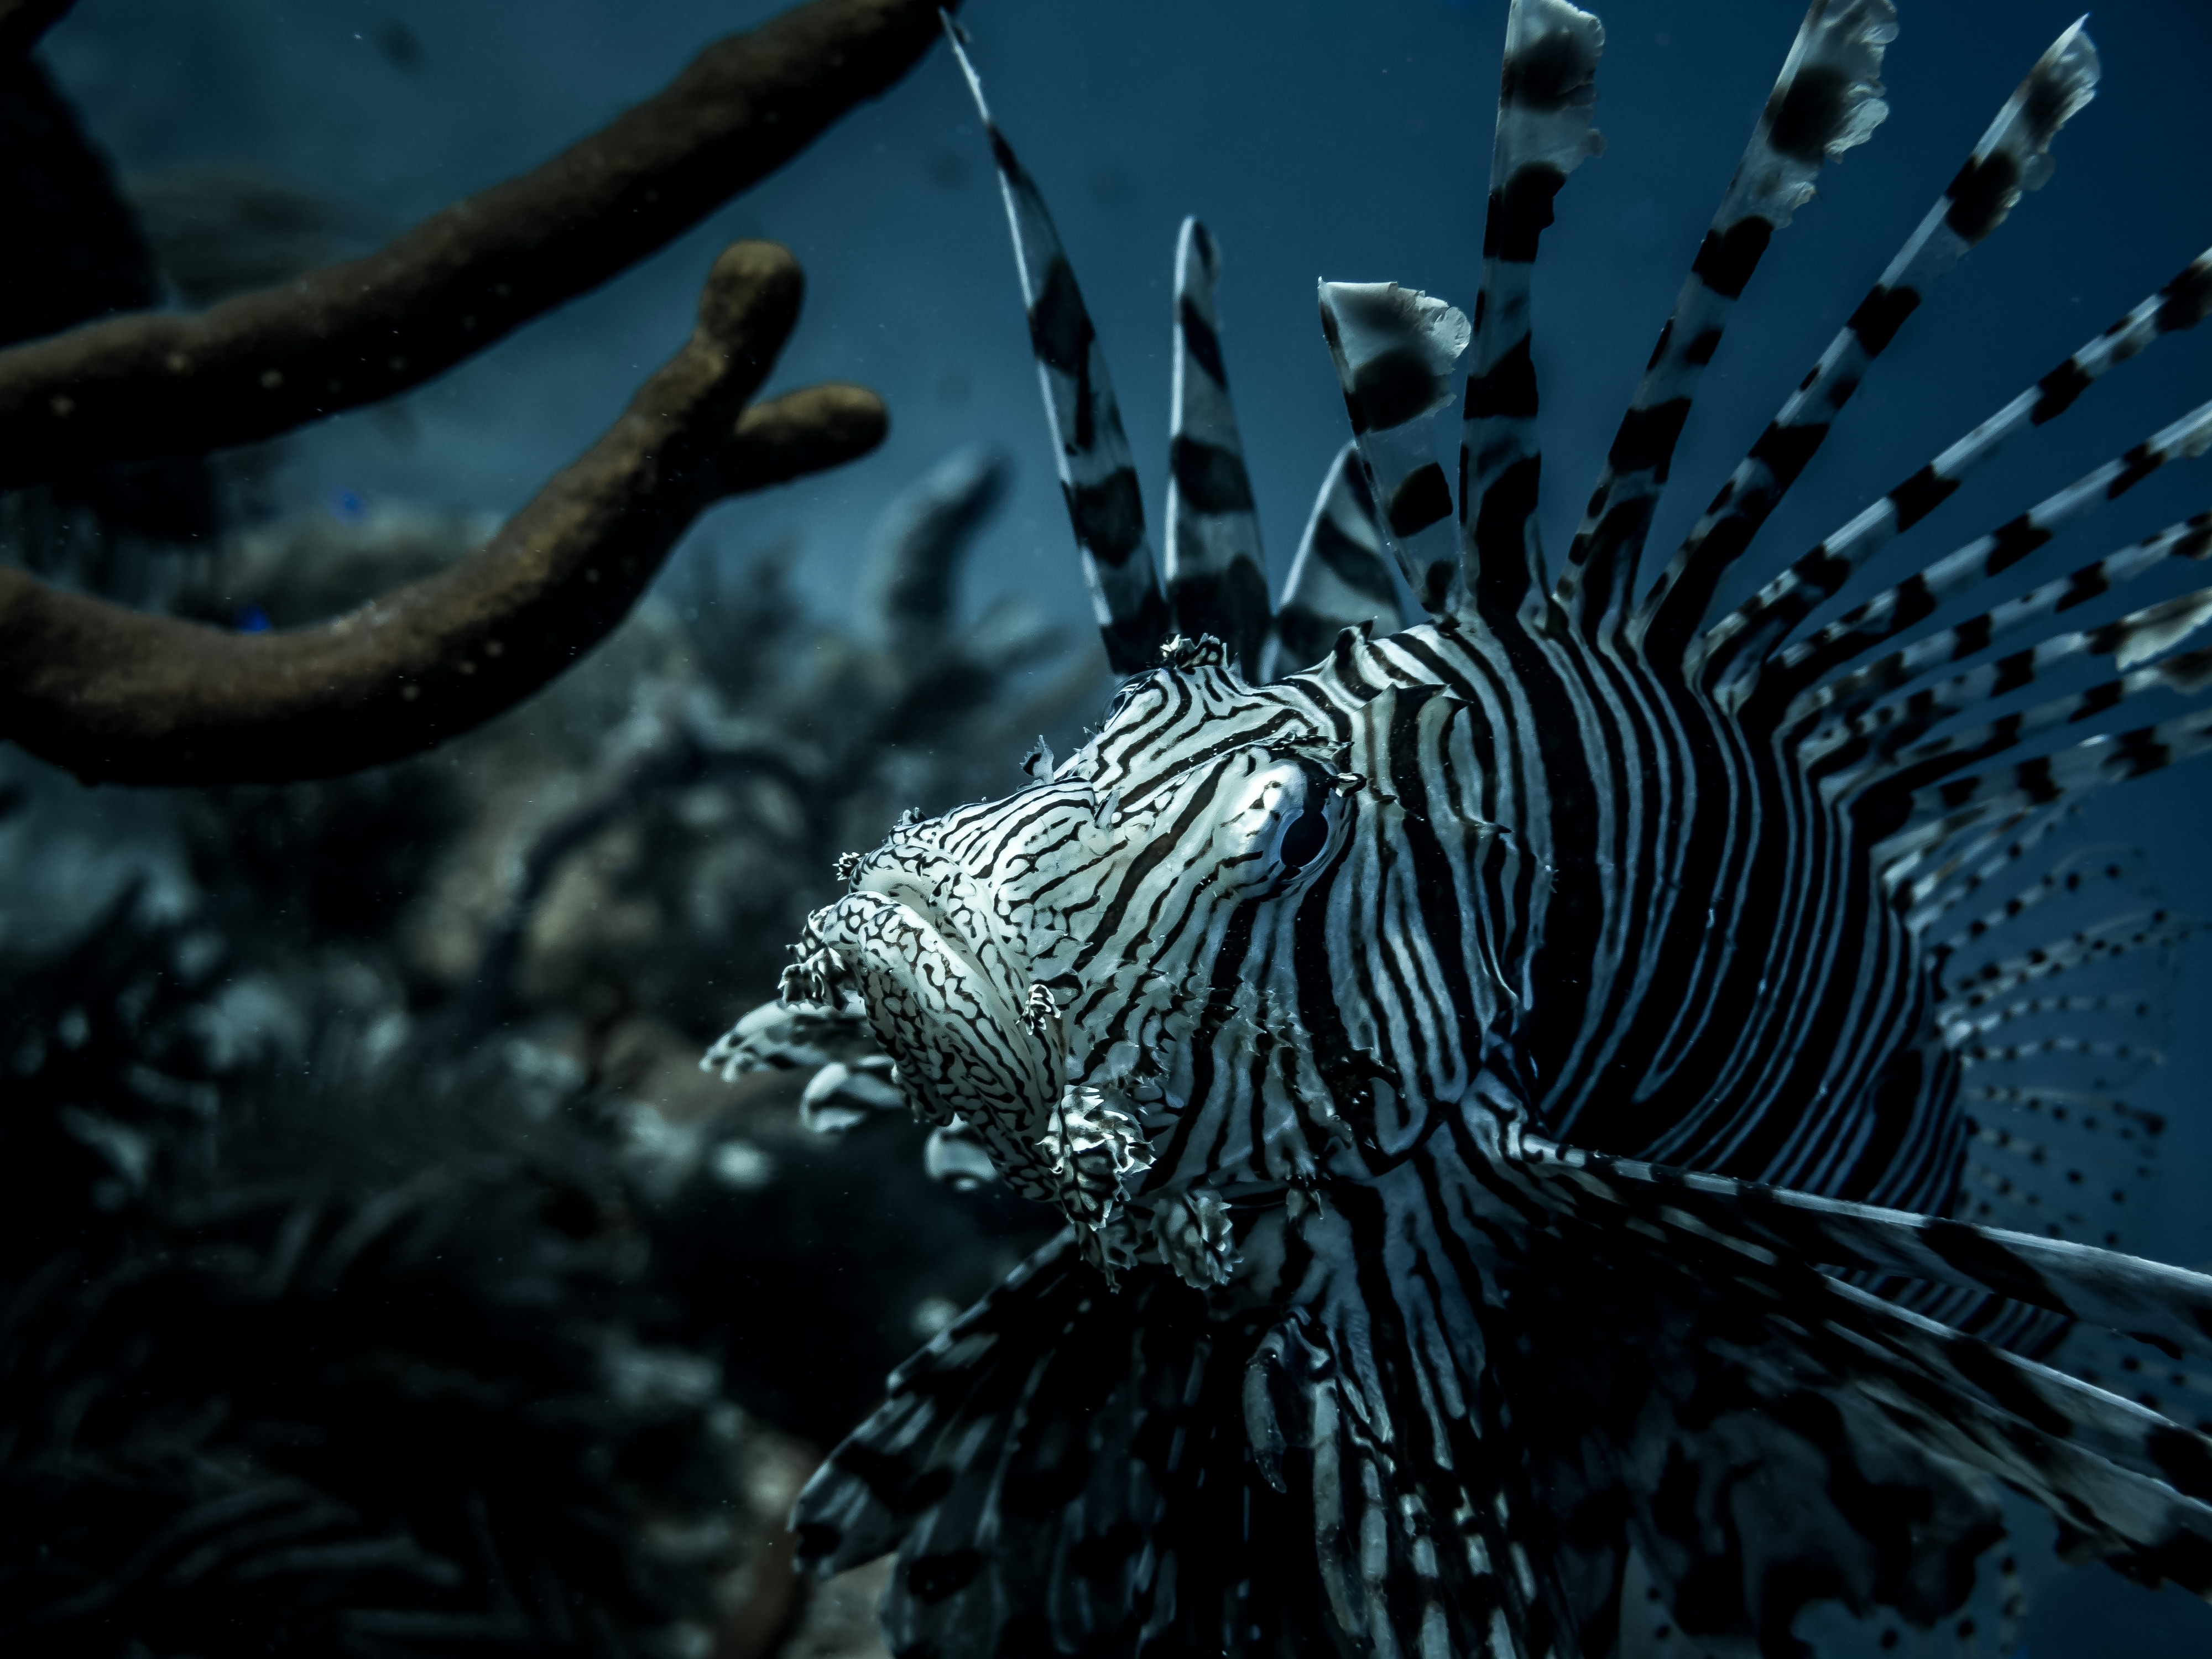 Zebra Fish Picture. Download Free Image